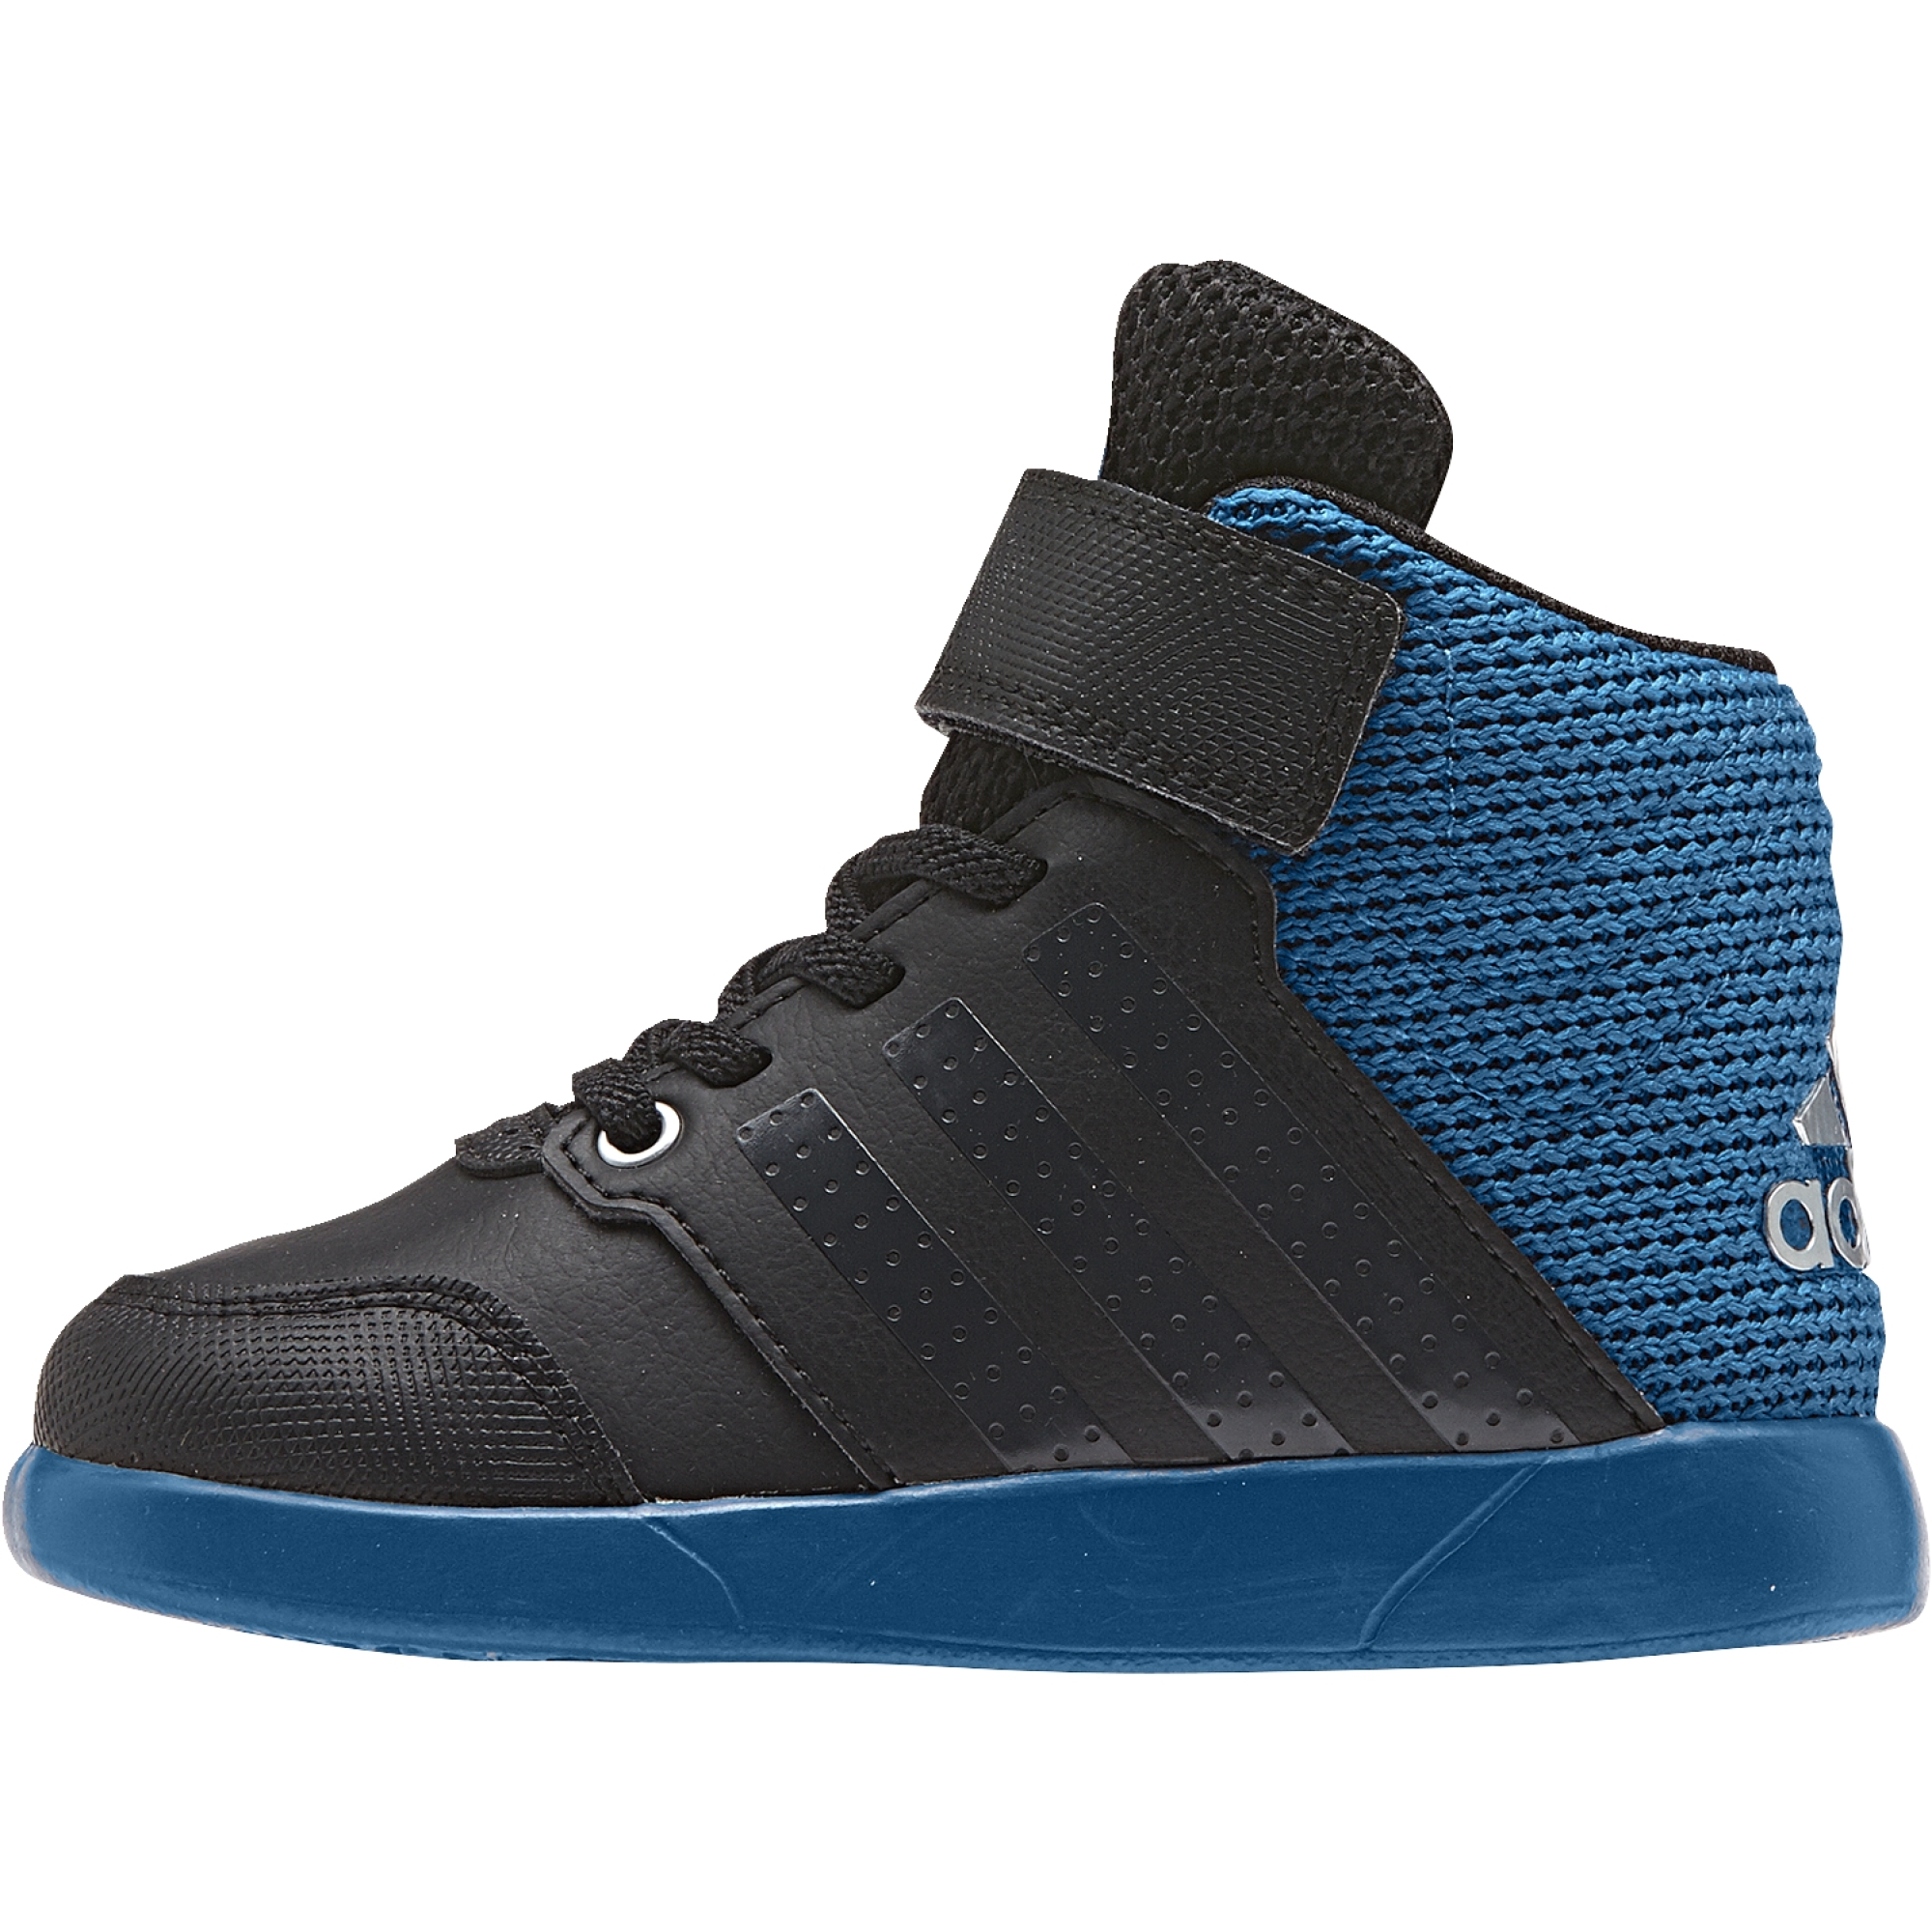 Adidas BS 2 I (black/blue) - manelsanchez.com